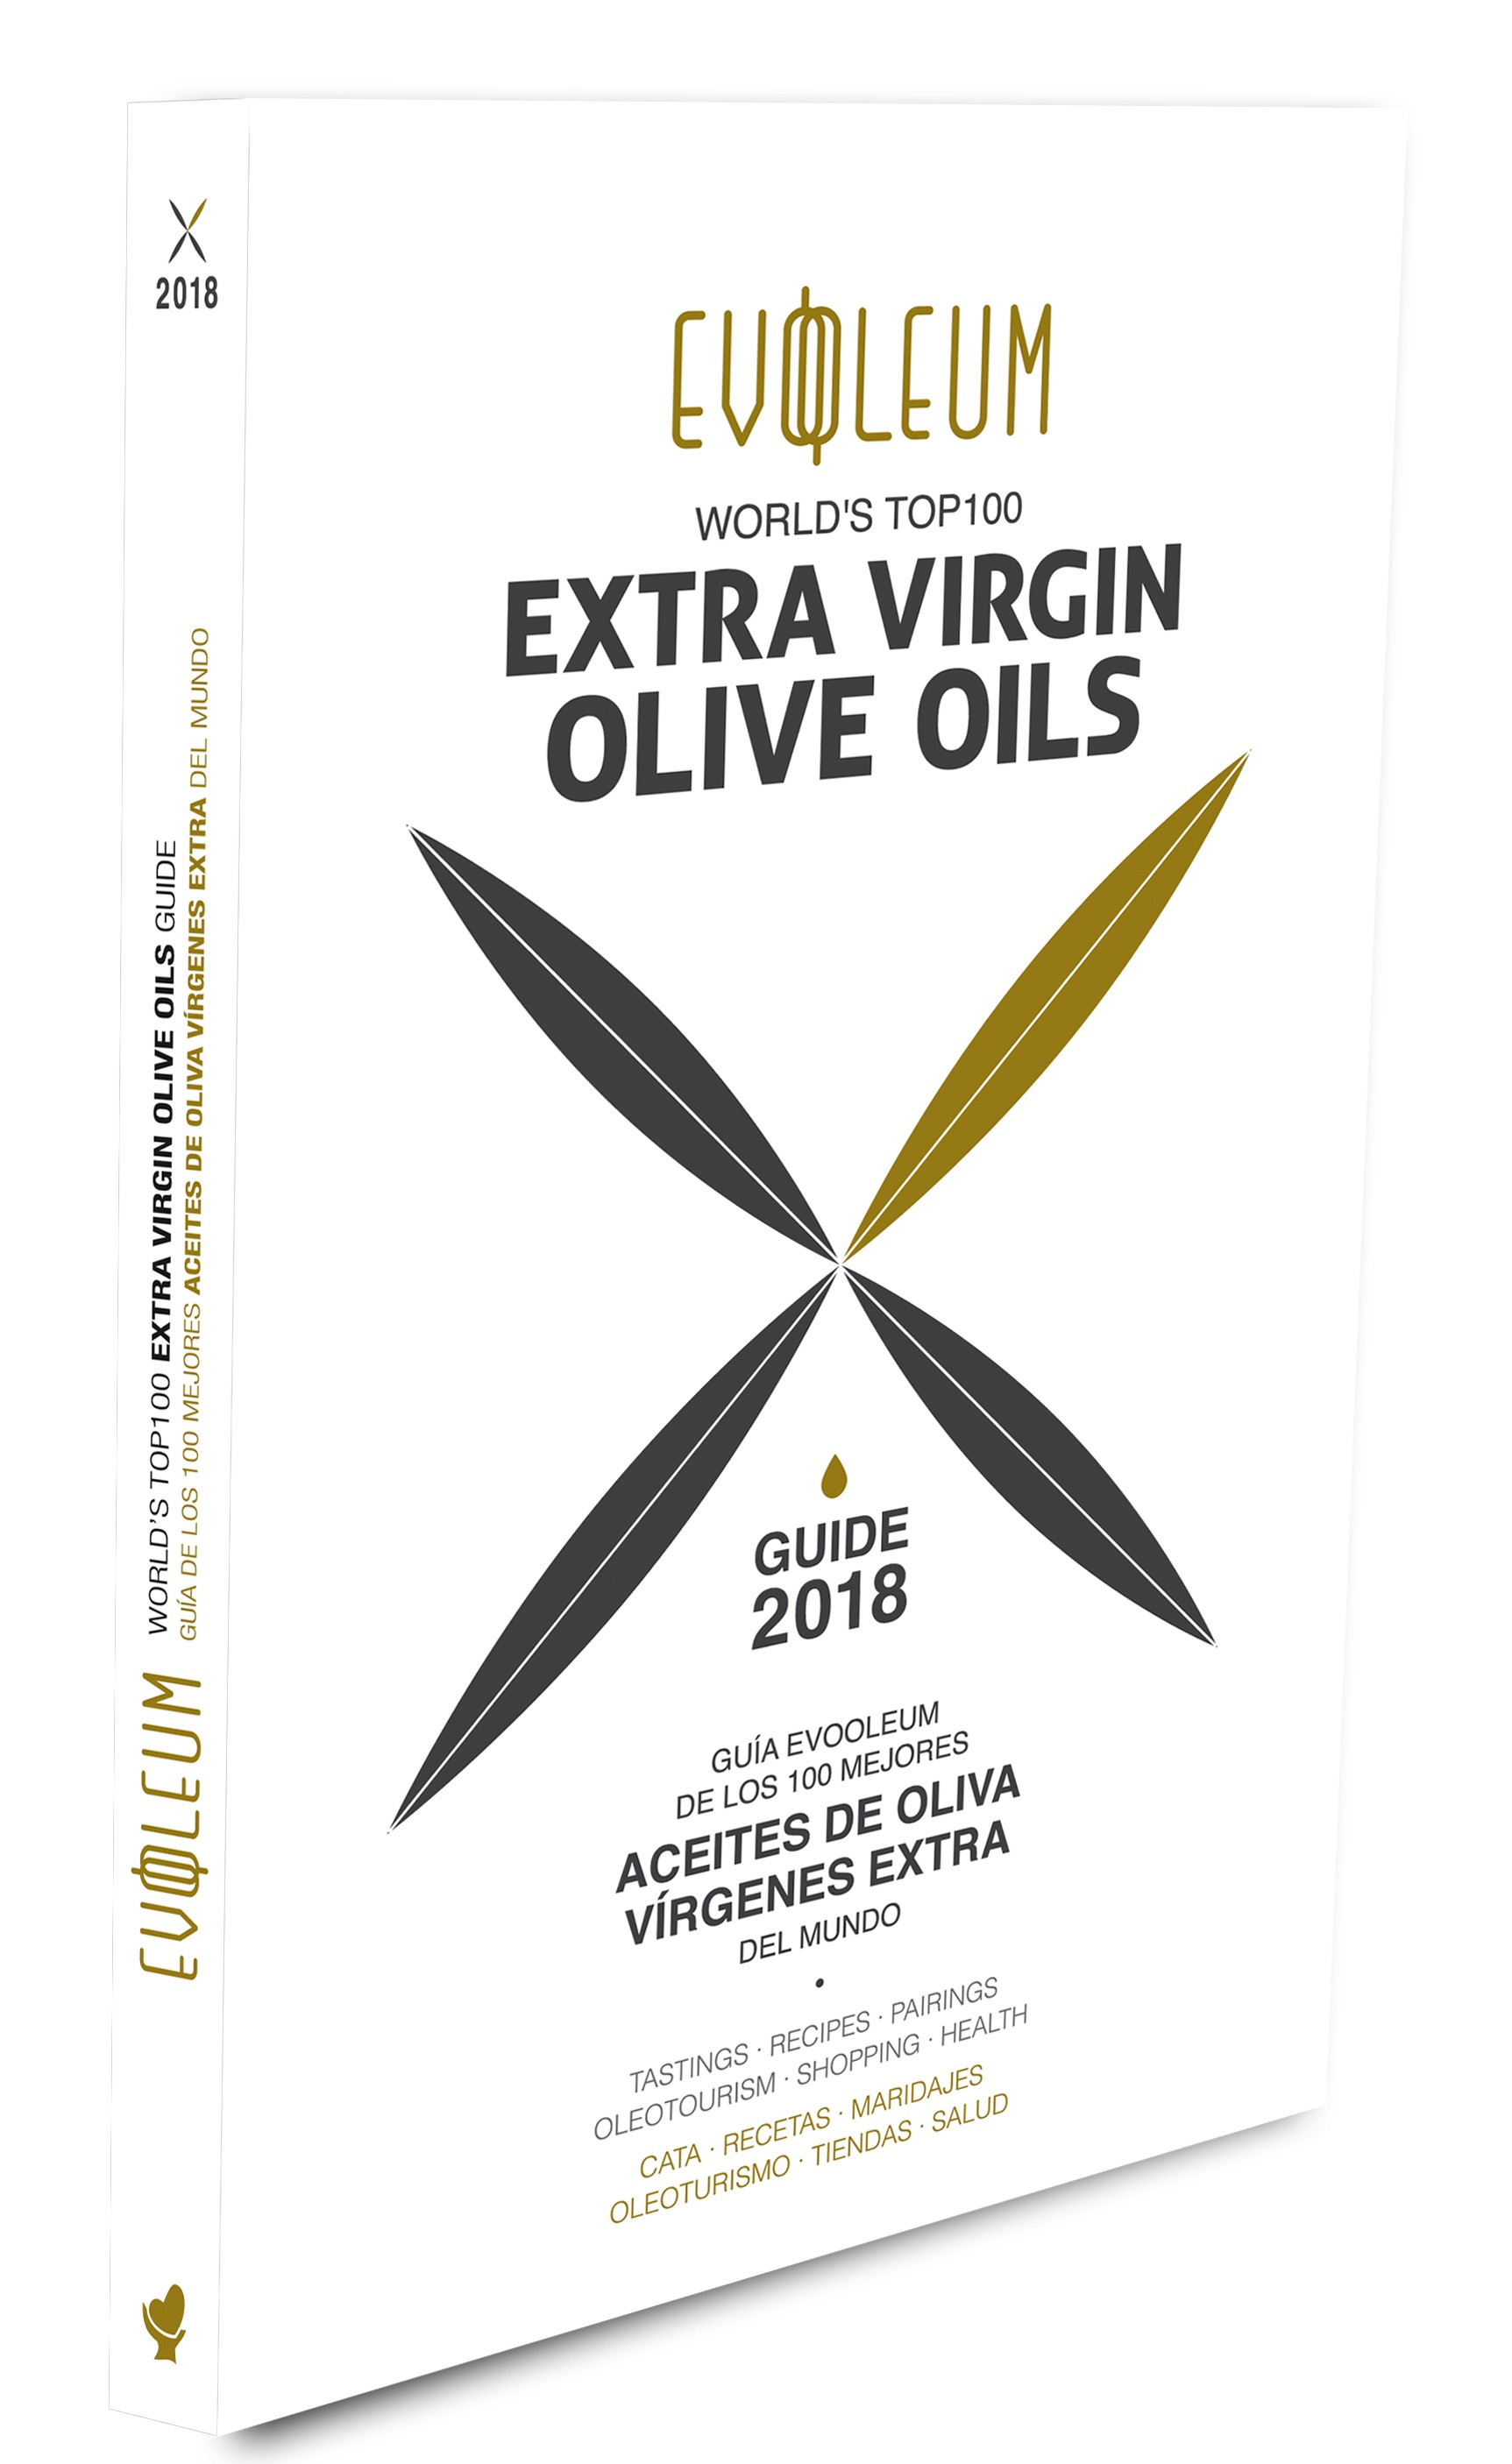 EVOOLEUM World's TOP 100 Extra Virgin Olive Oils Guide - 2018 - Der Guide  zu den 100 besten Olivenölen der Welt